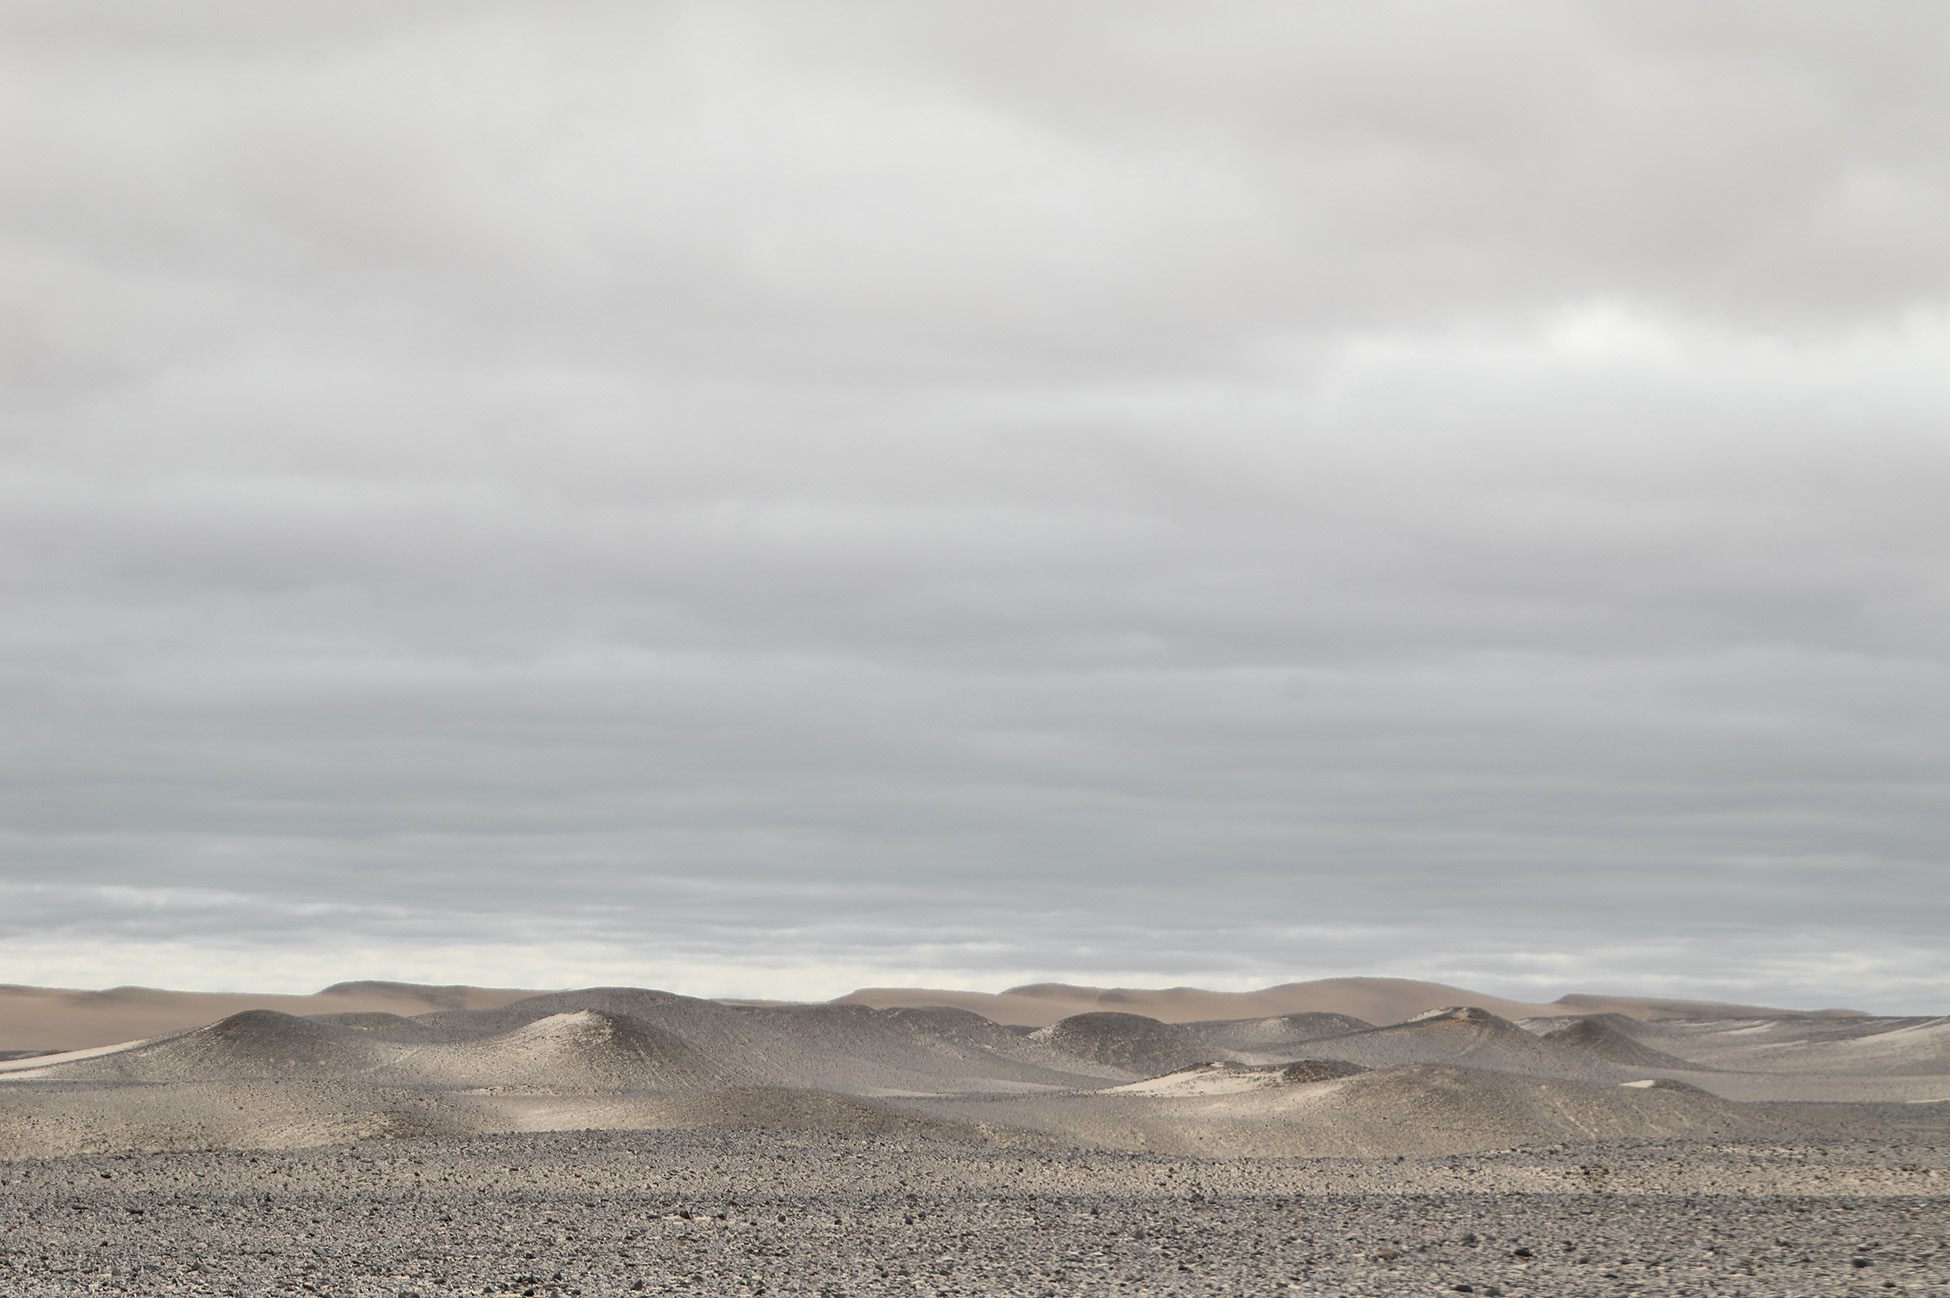 Dunes of the Skeleton coast